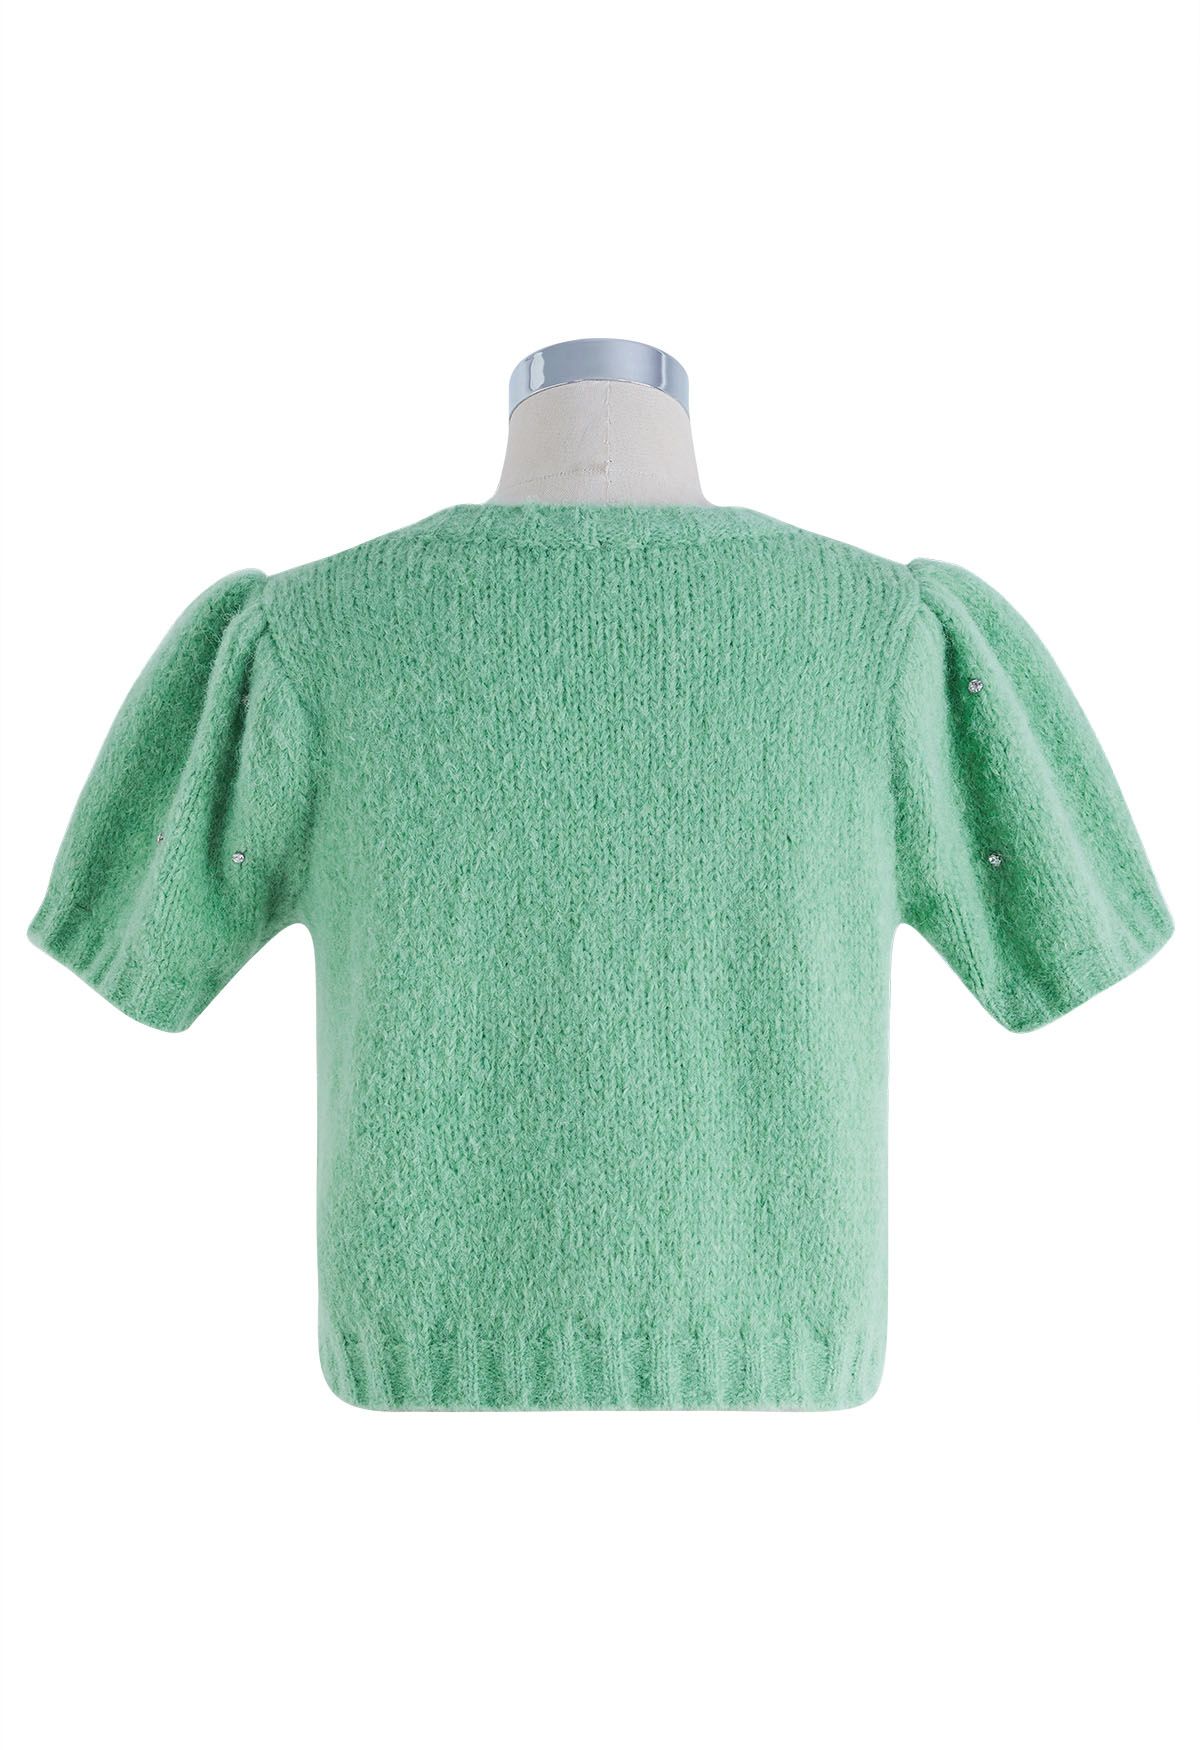 Pull en tricot flou orné de strass en vert